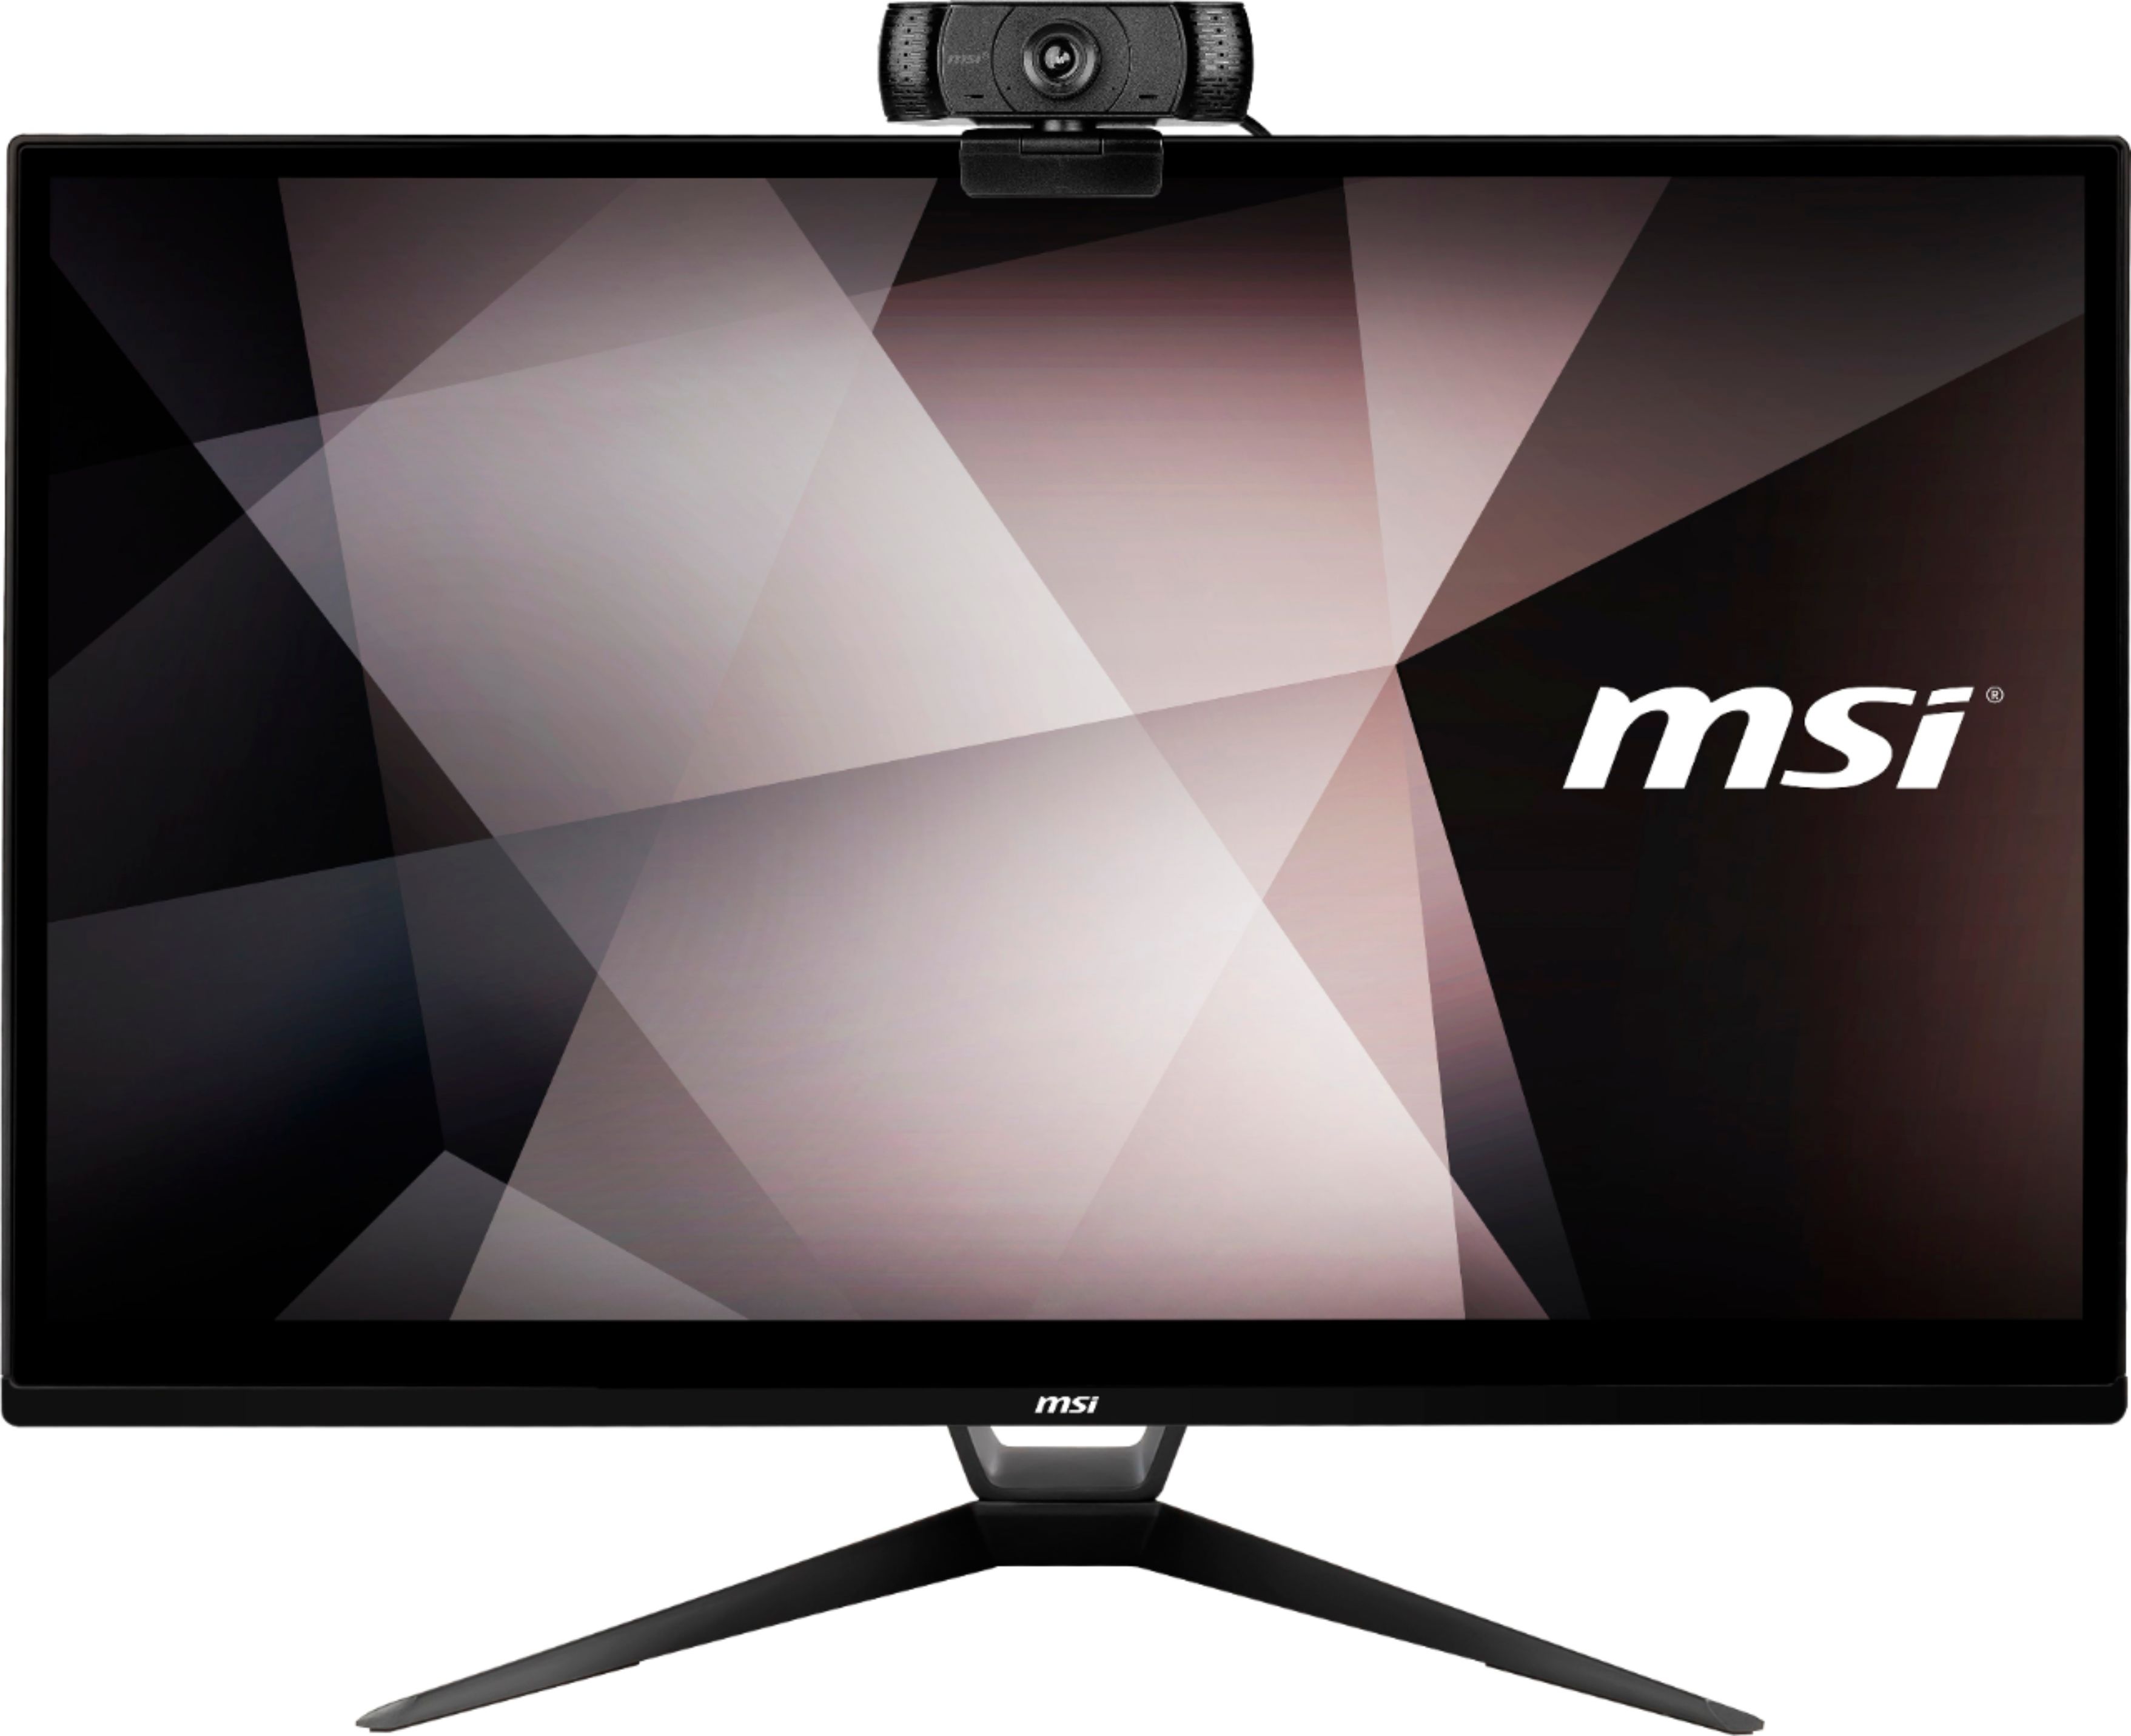 MSI WIND TOP ap2021 50,8 cm 20" Intel i3 @ 3,30ghz 8gb 120gb SSD touchscreen # S 